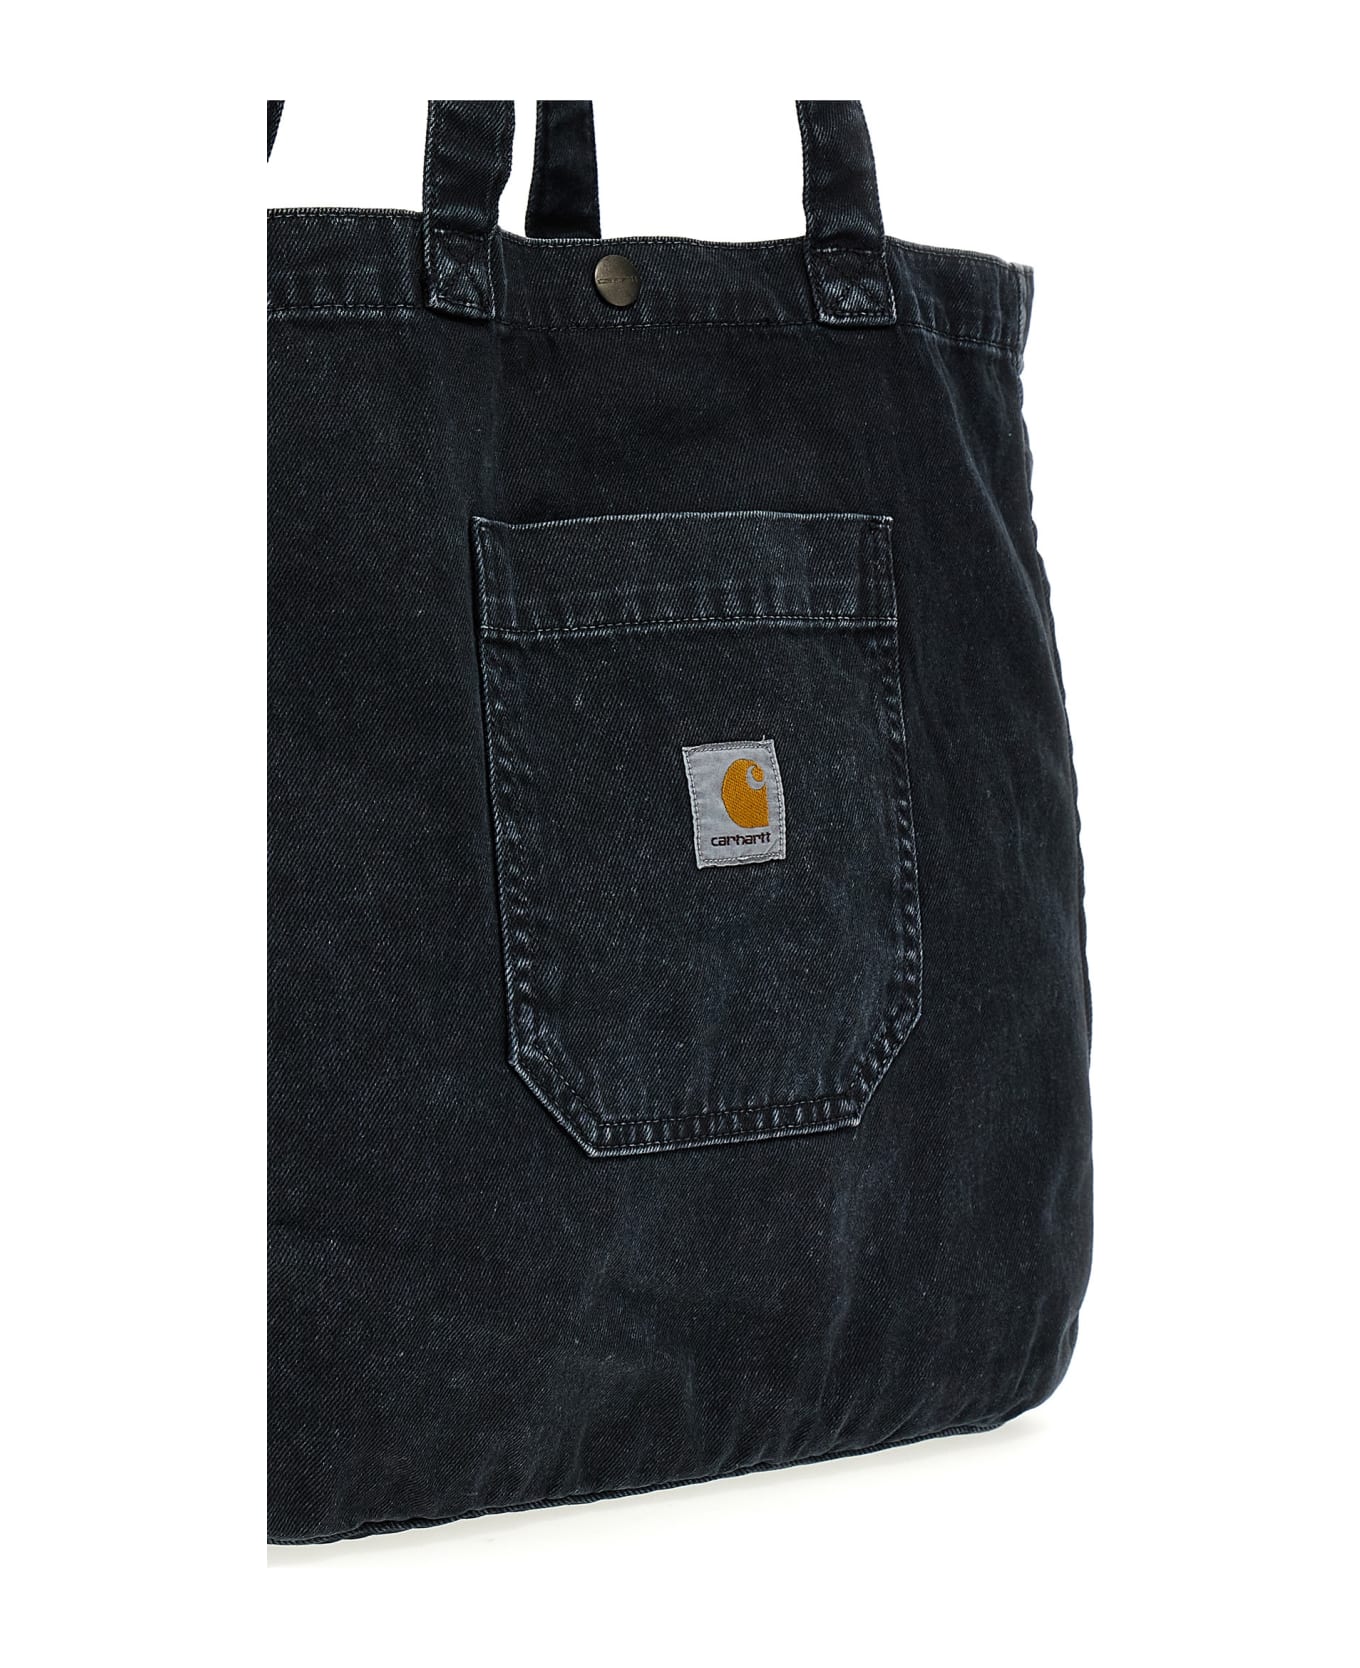 Carhartt 'garrison' Shopping Bag - Black  